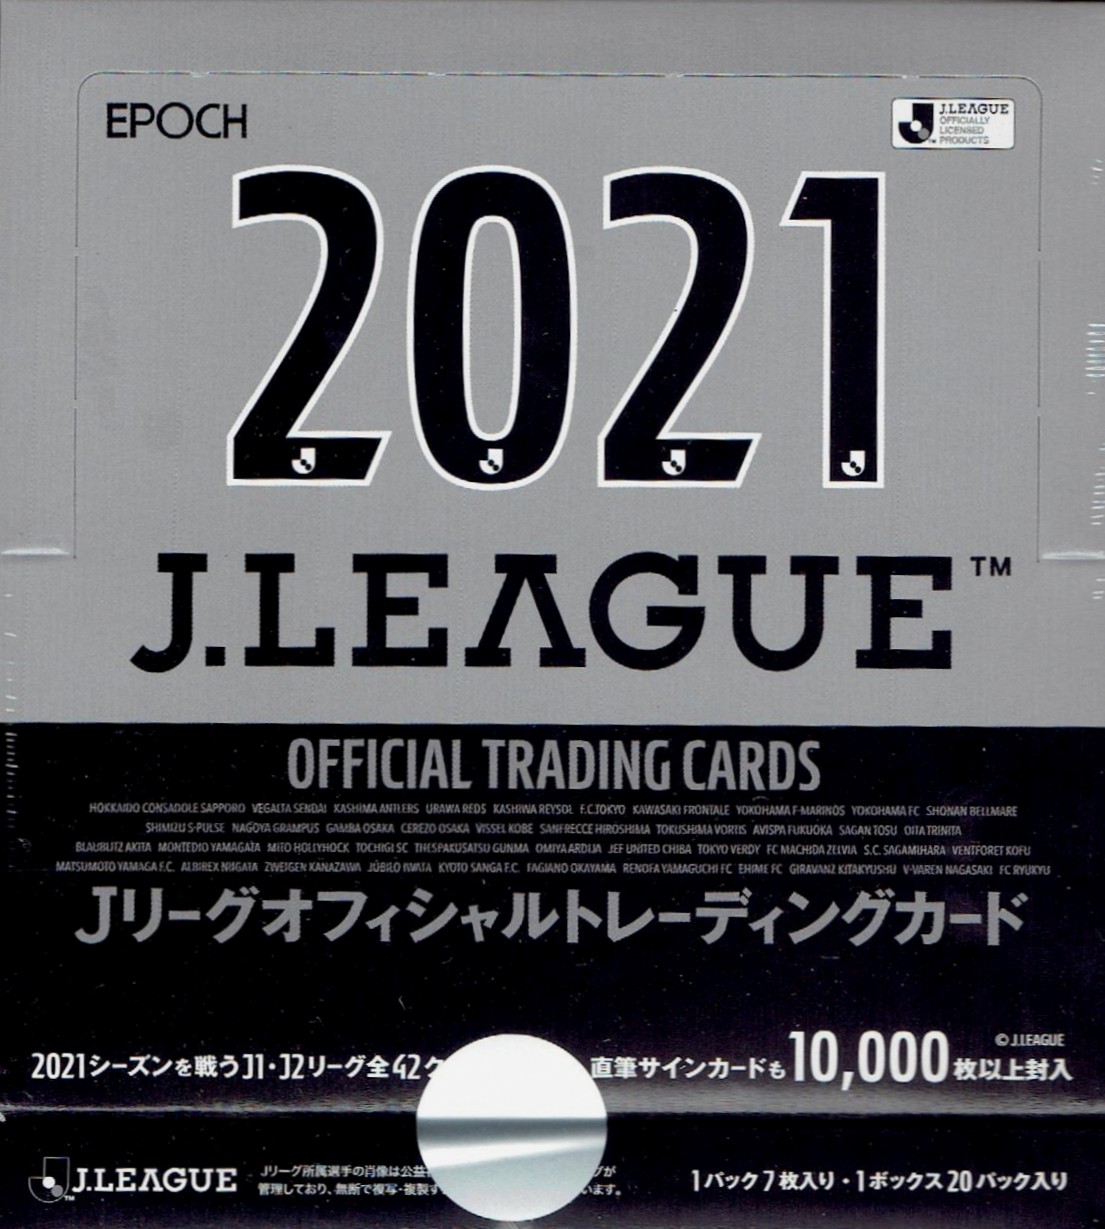 ot_nss長沢駿 直筆サイン入りユニフォームナンバーカード EPOCH 2021 Jリーグ